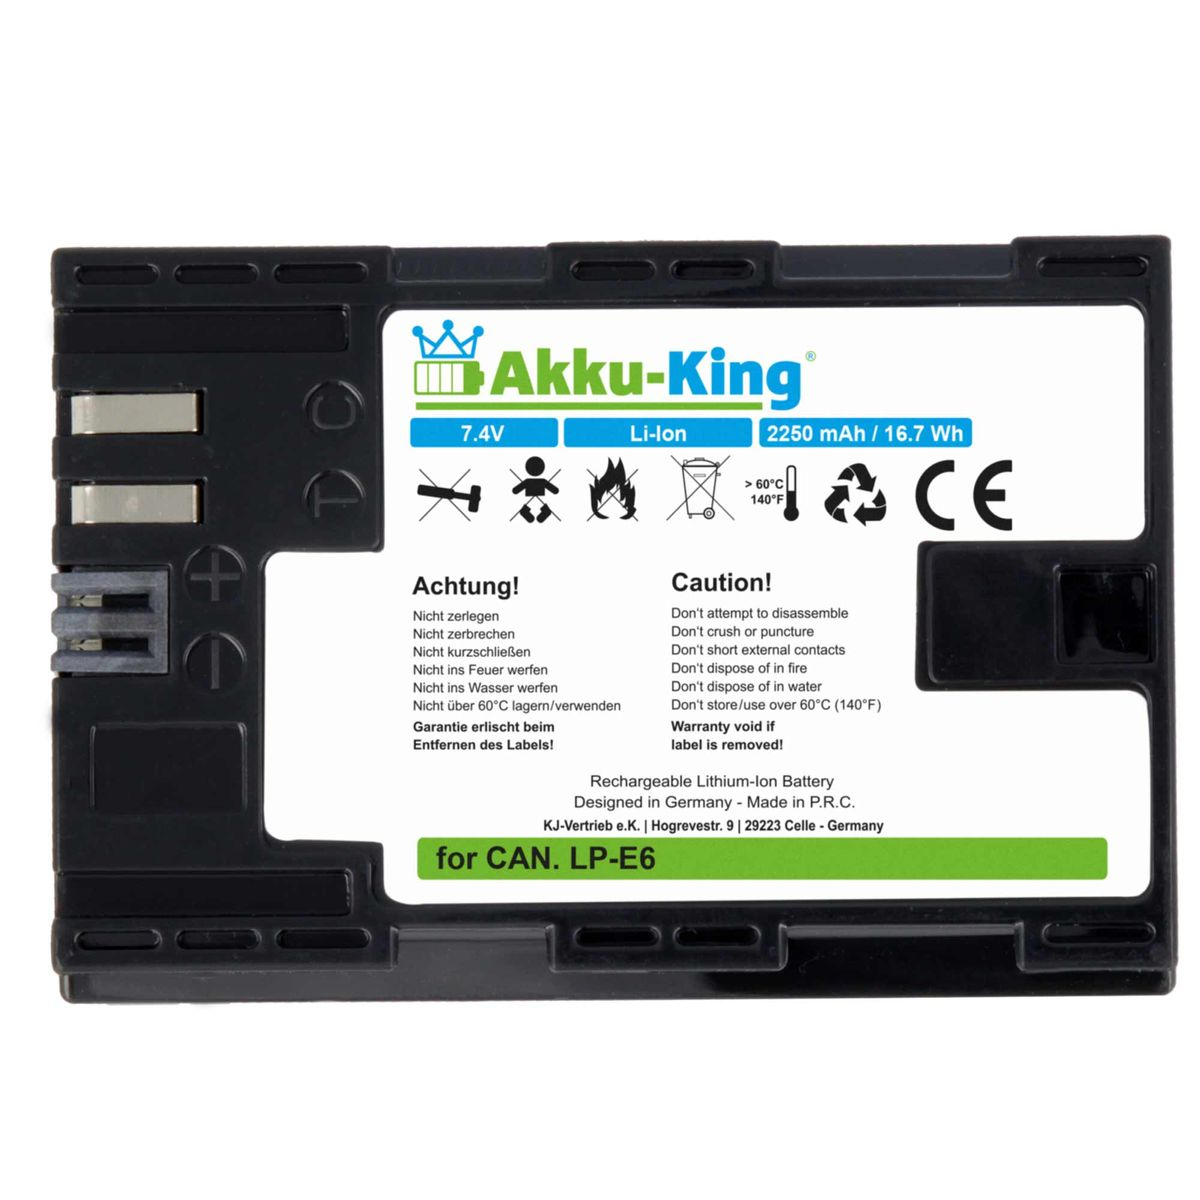 AKKU-KING Akku 2250mAh mit LP-E6 kompatibel Li-Ion Canon Kamera-Akku, 7.4 Volt